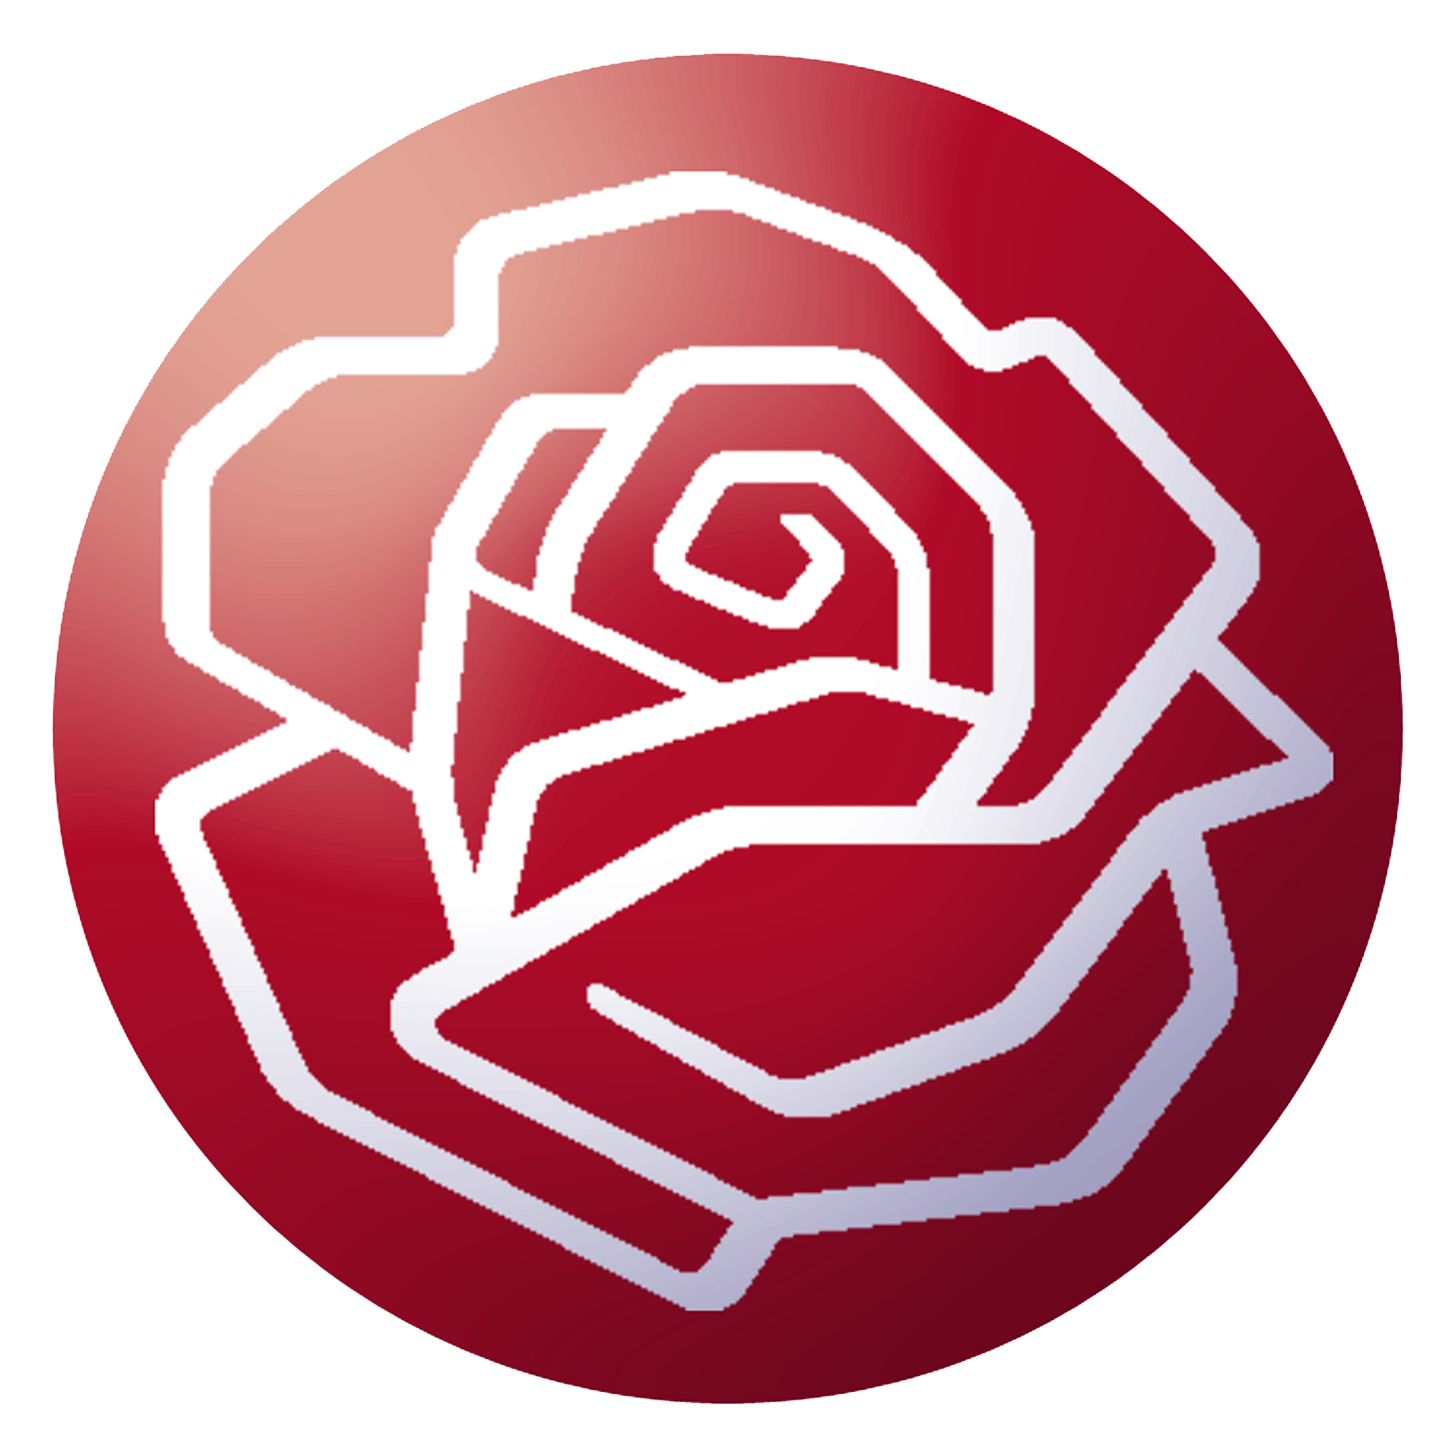 Socialist Logo - Socialist Party of Granida rose.png